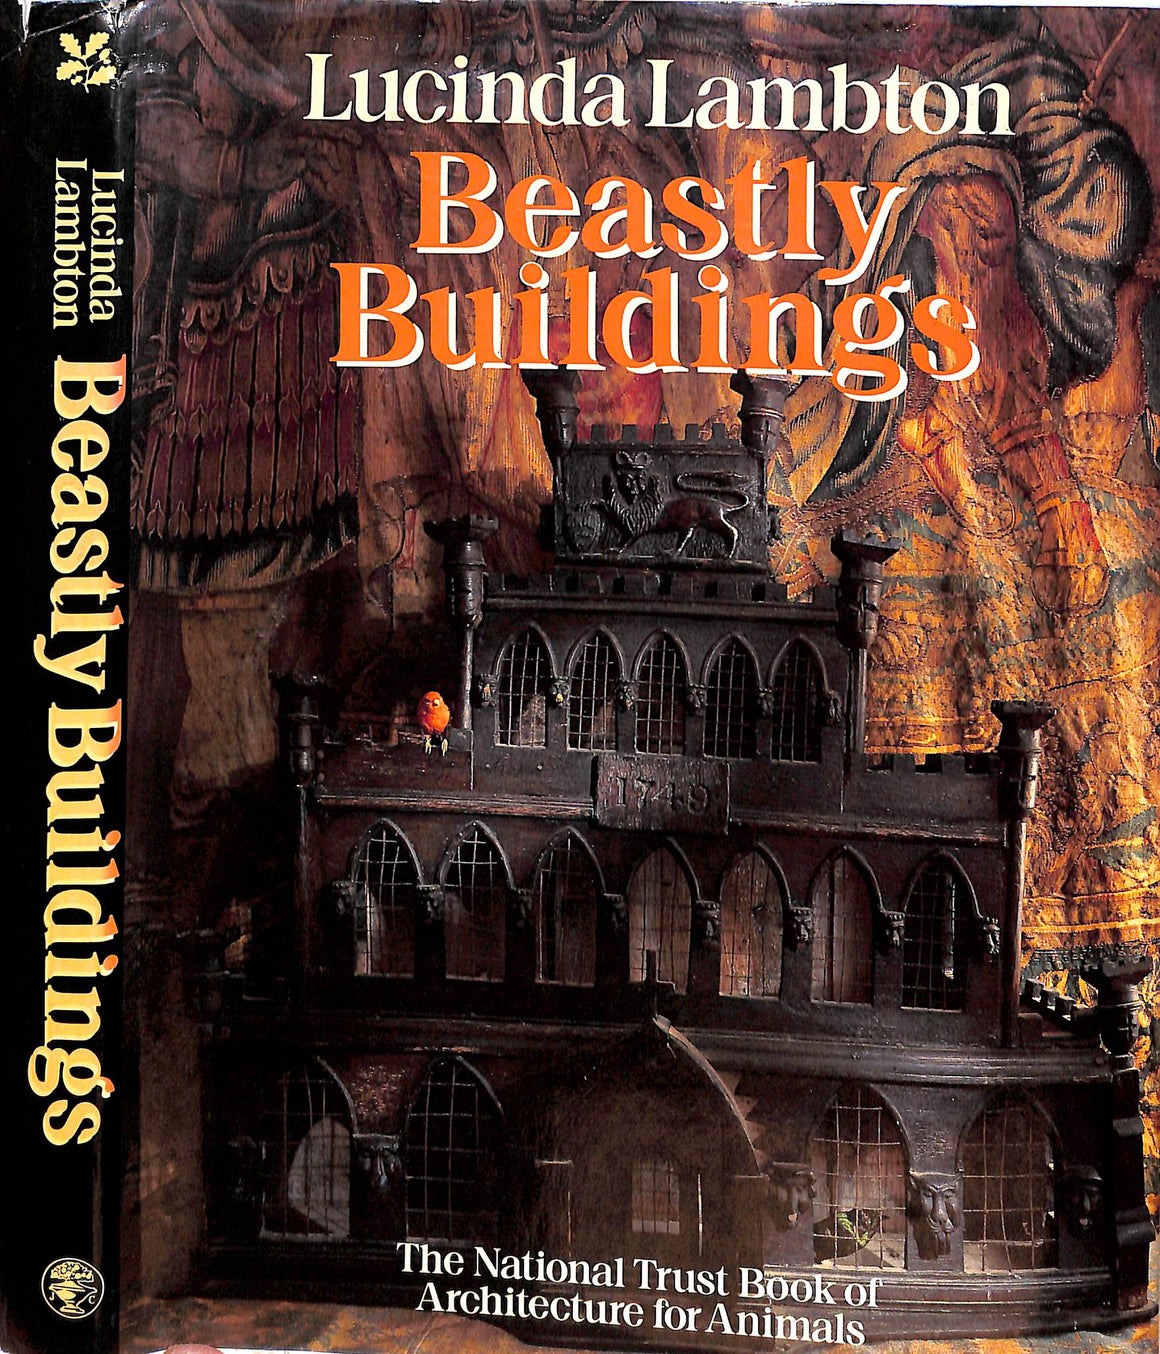 "Beastly Buildings" 1985 LAMBTON, Lucinda